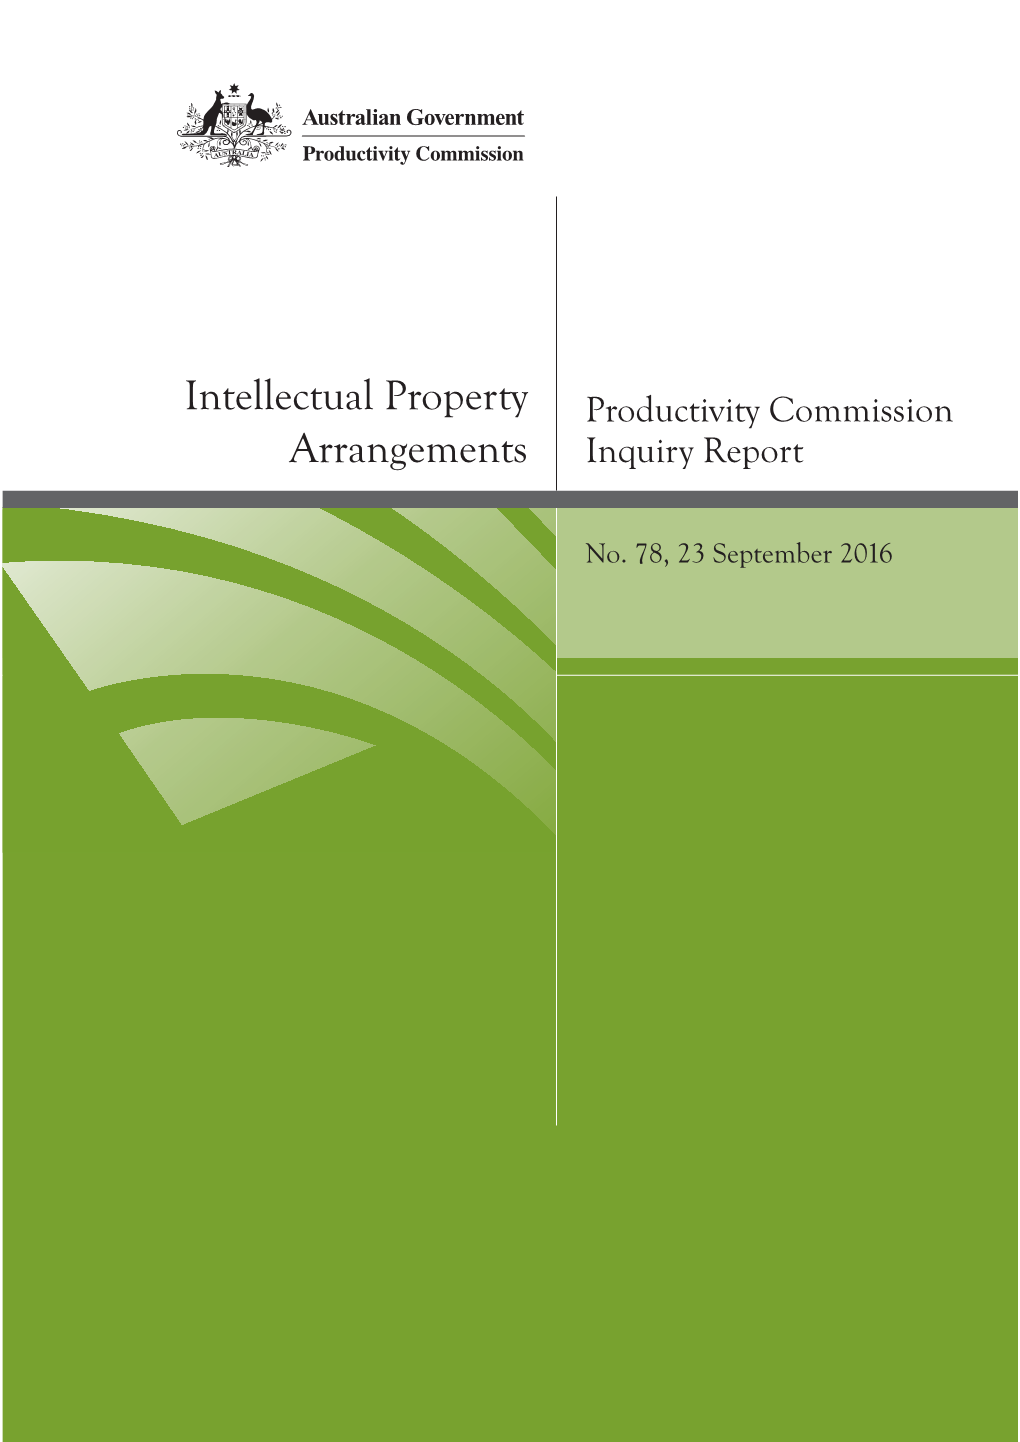 Intellectual Property Arrangements, Inquiry Report